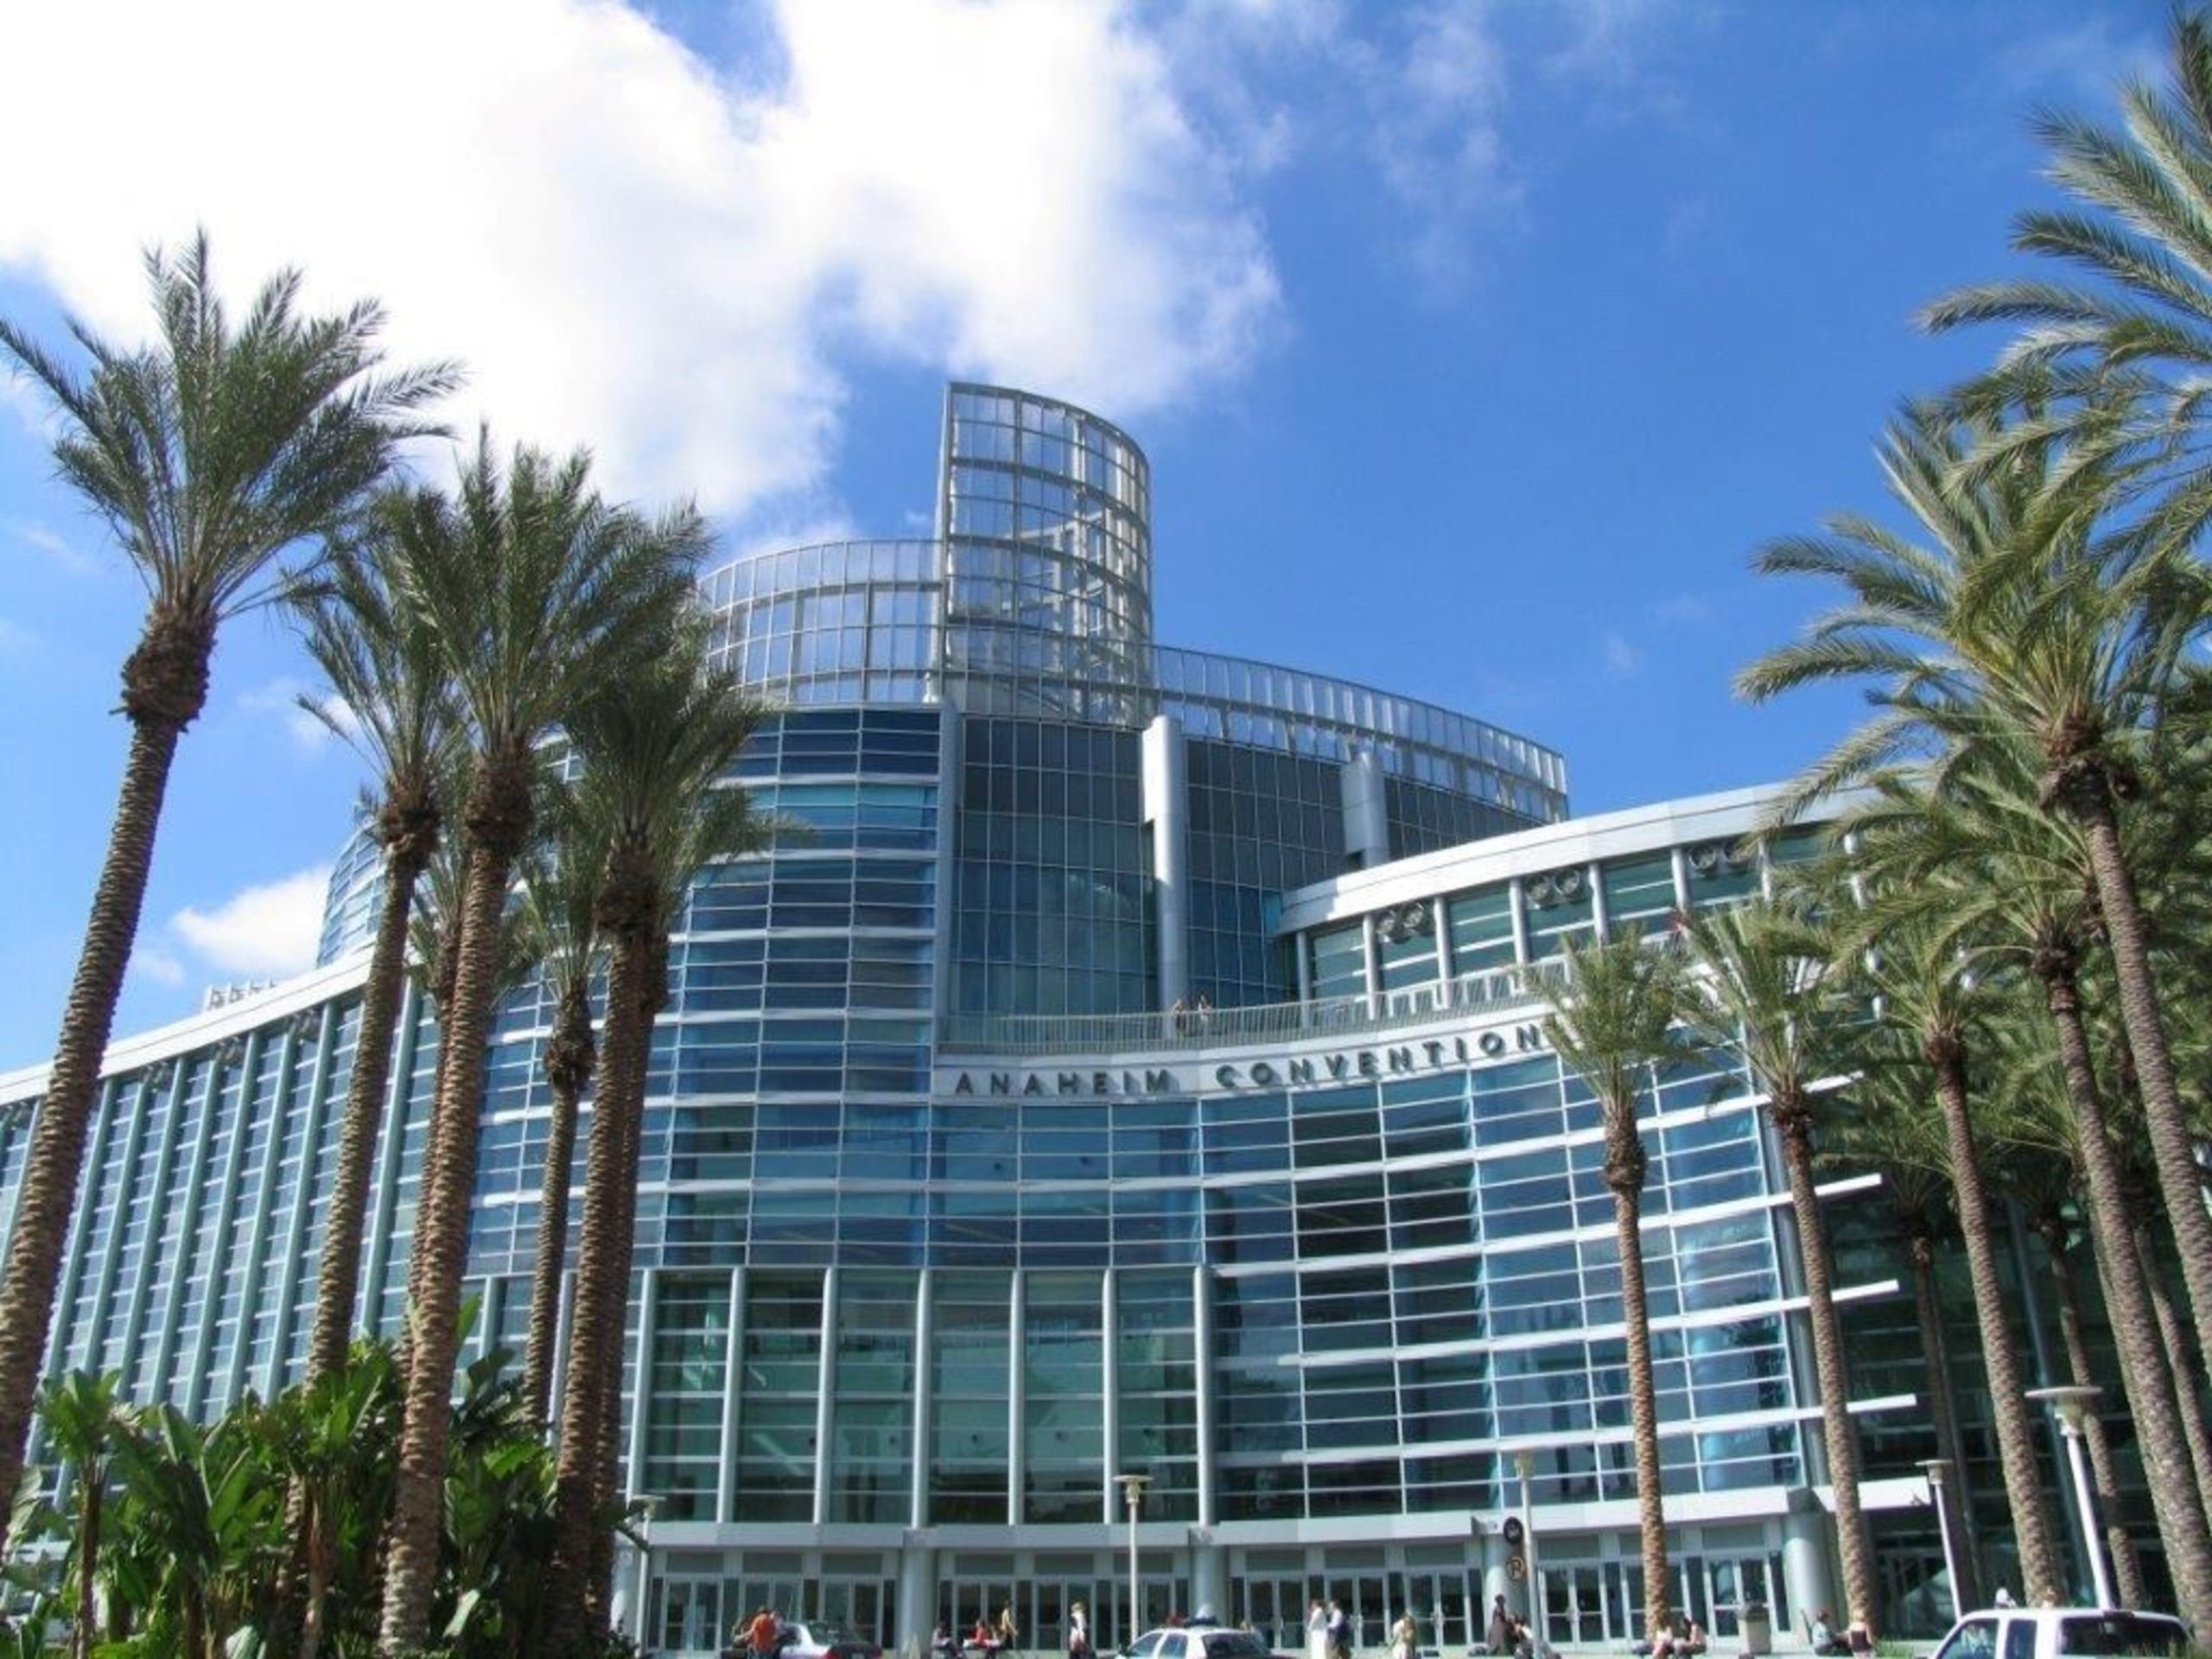 Anaheim Convention Center A showcase of sustainability pv magazine USA